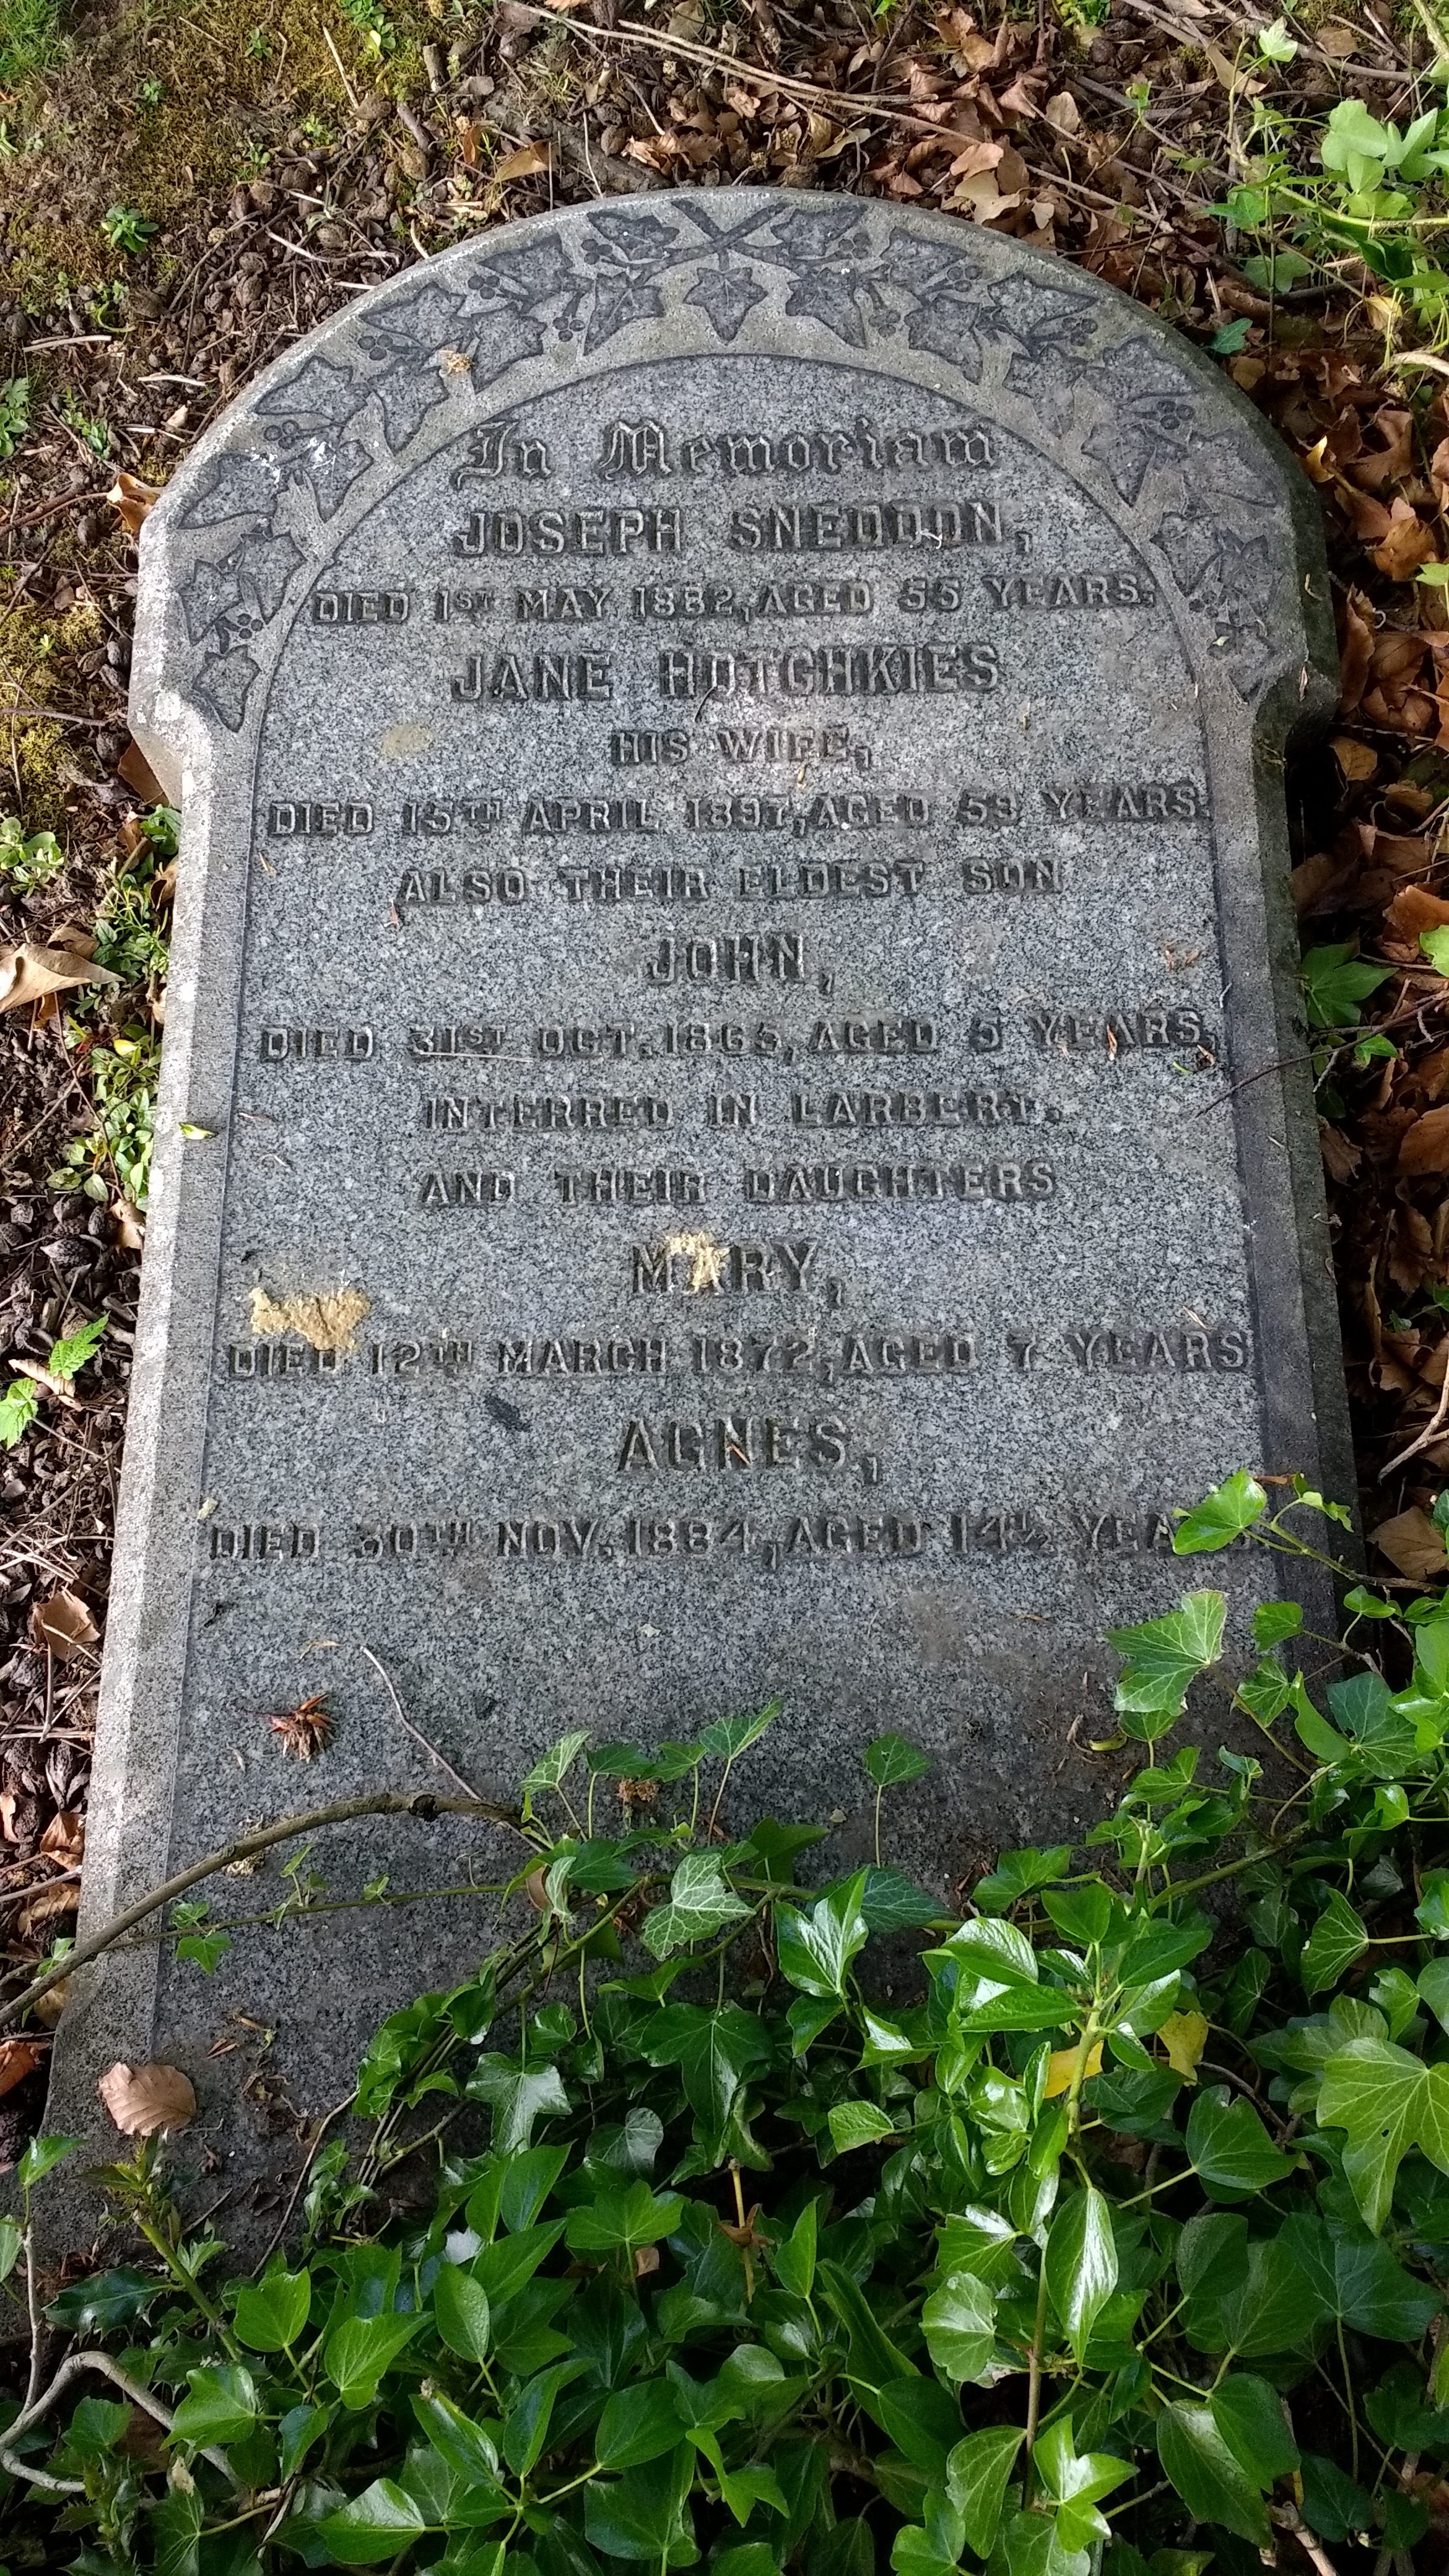 JosephSneddon and Jane Hotchkies and family gravestones